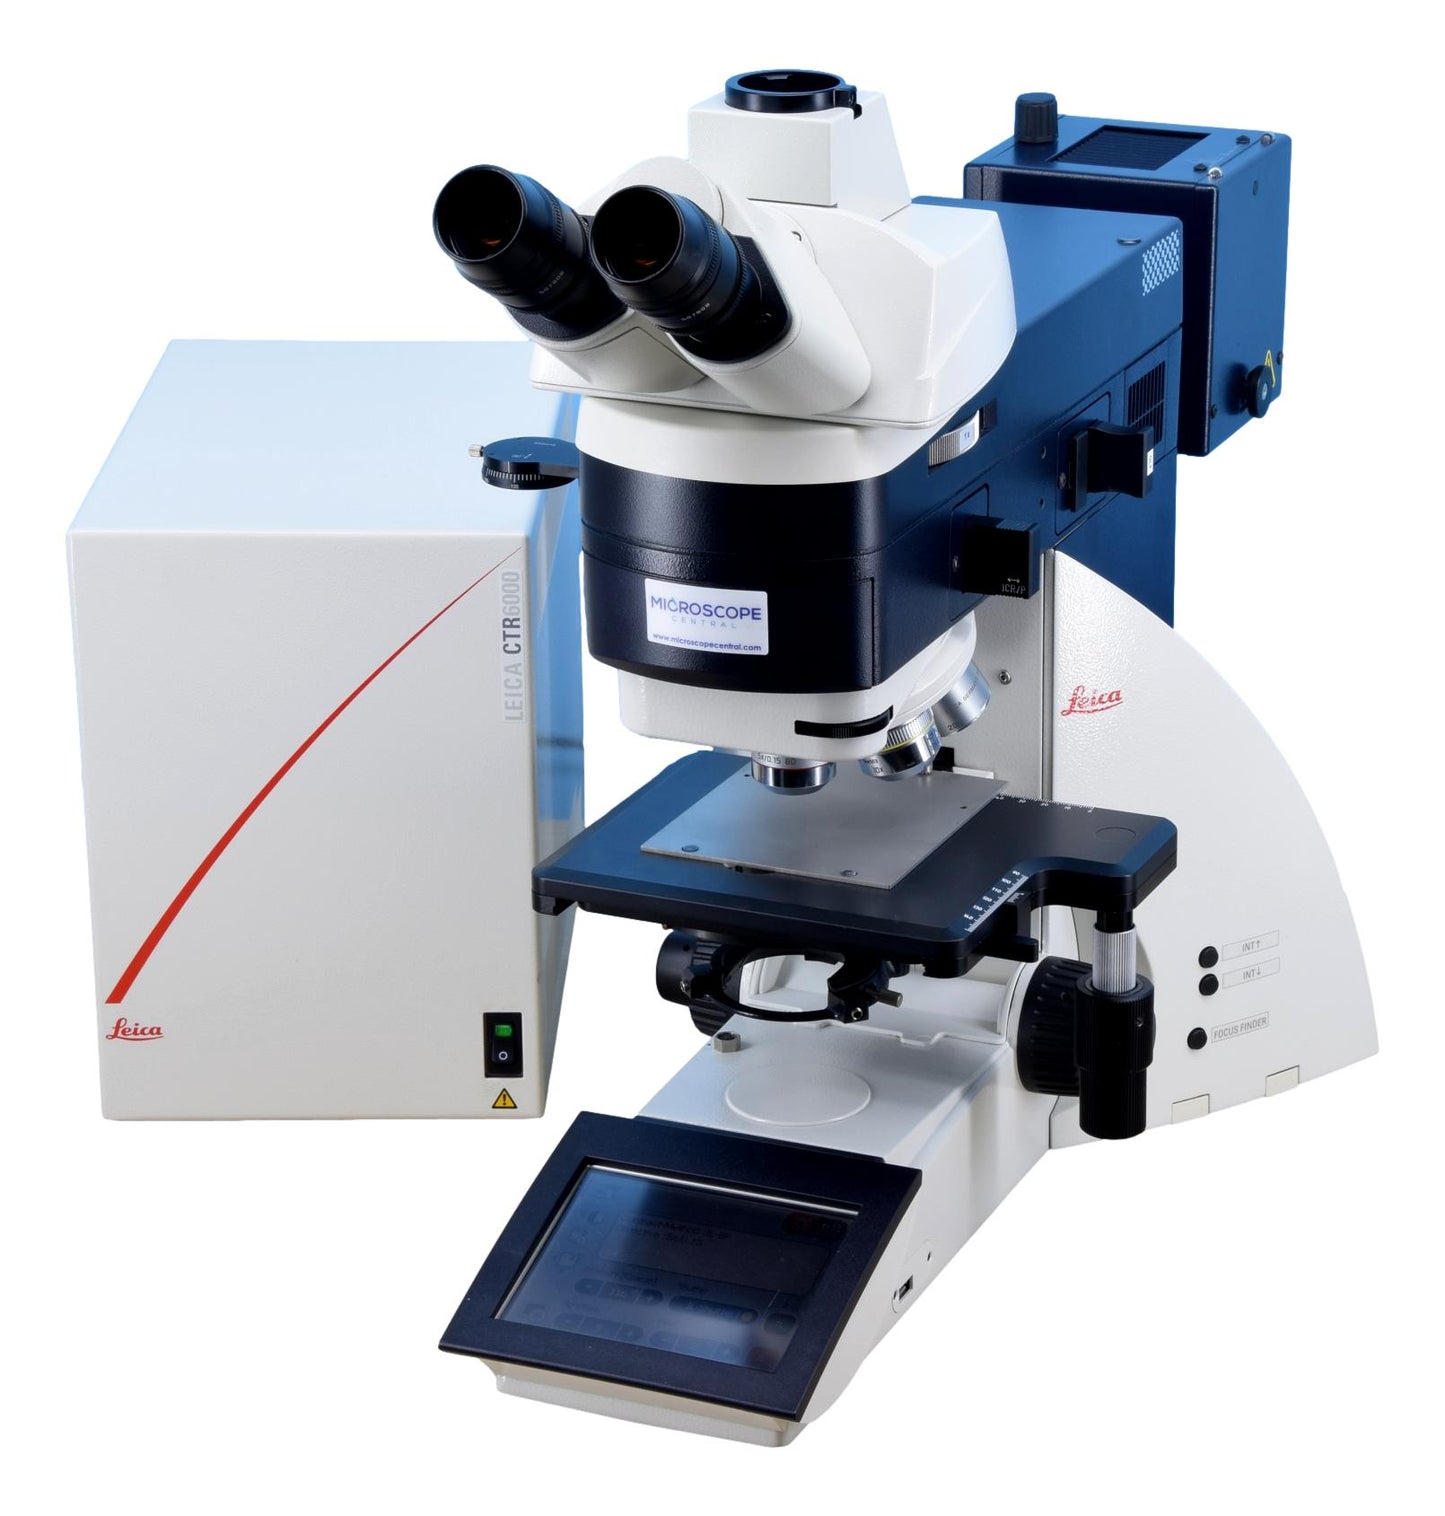 Leica DM6000 M Materials Microscope 